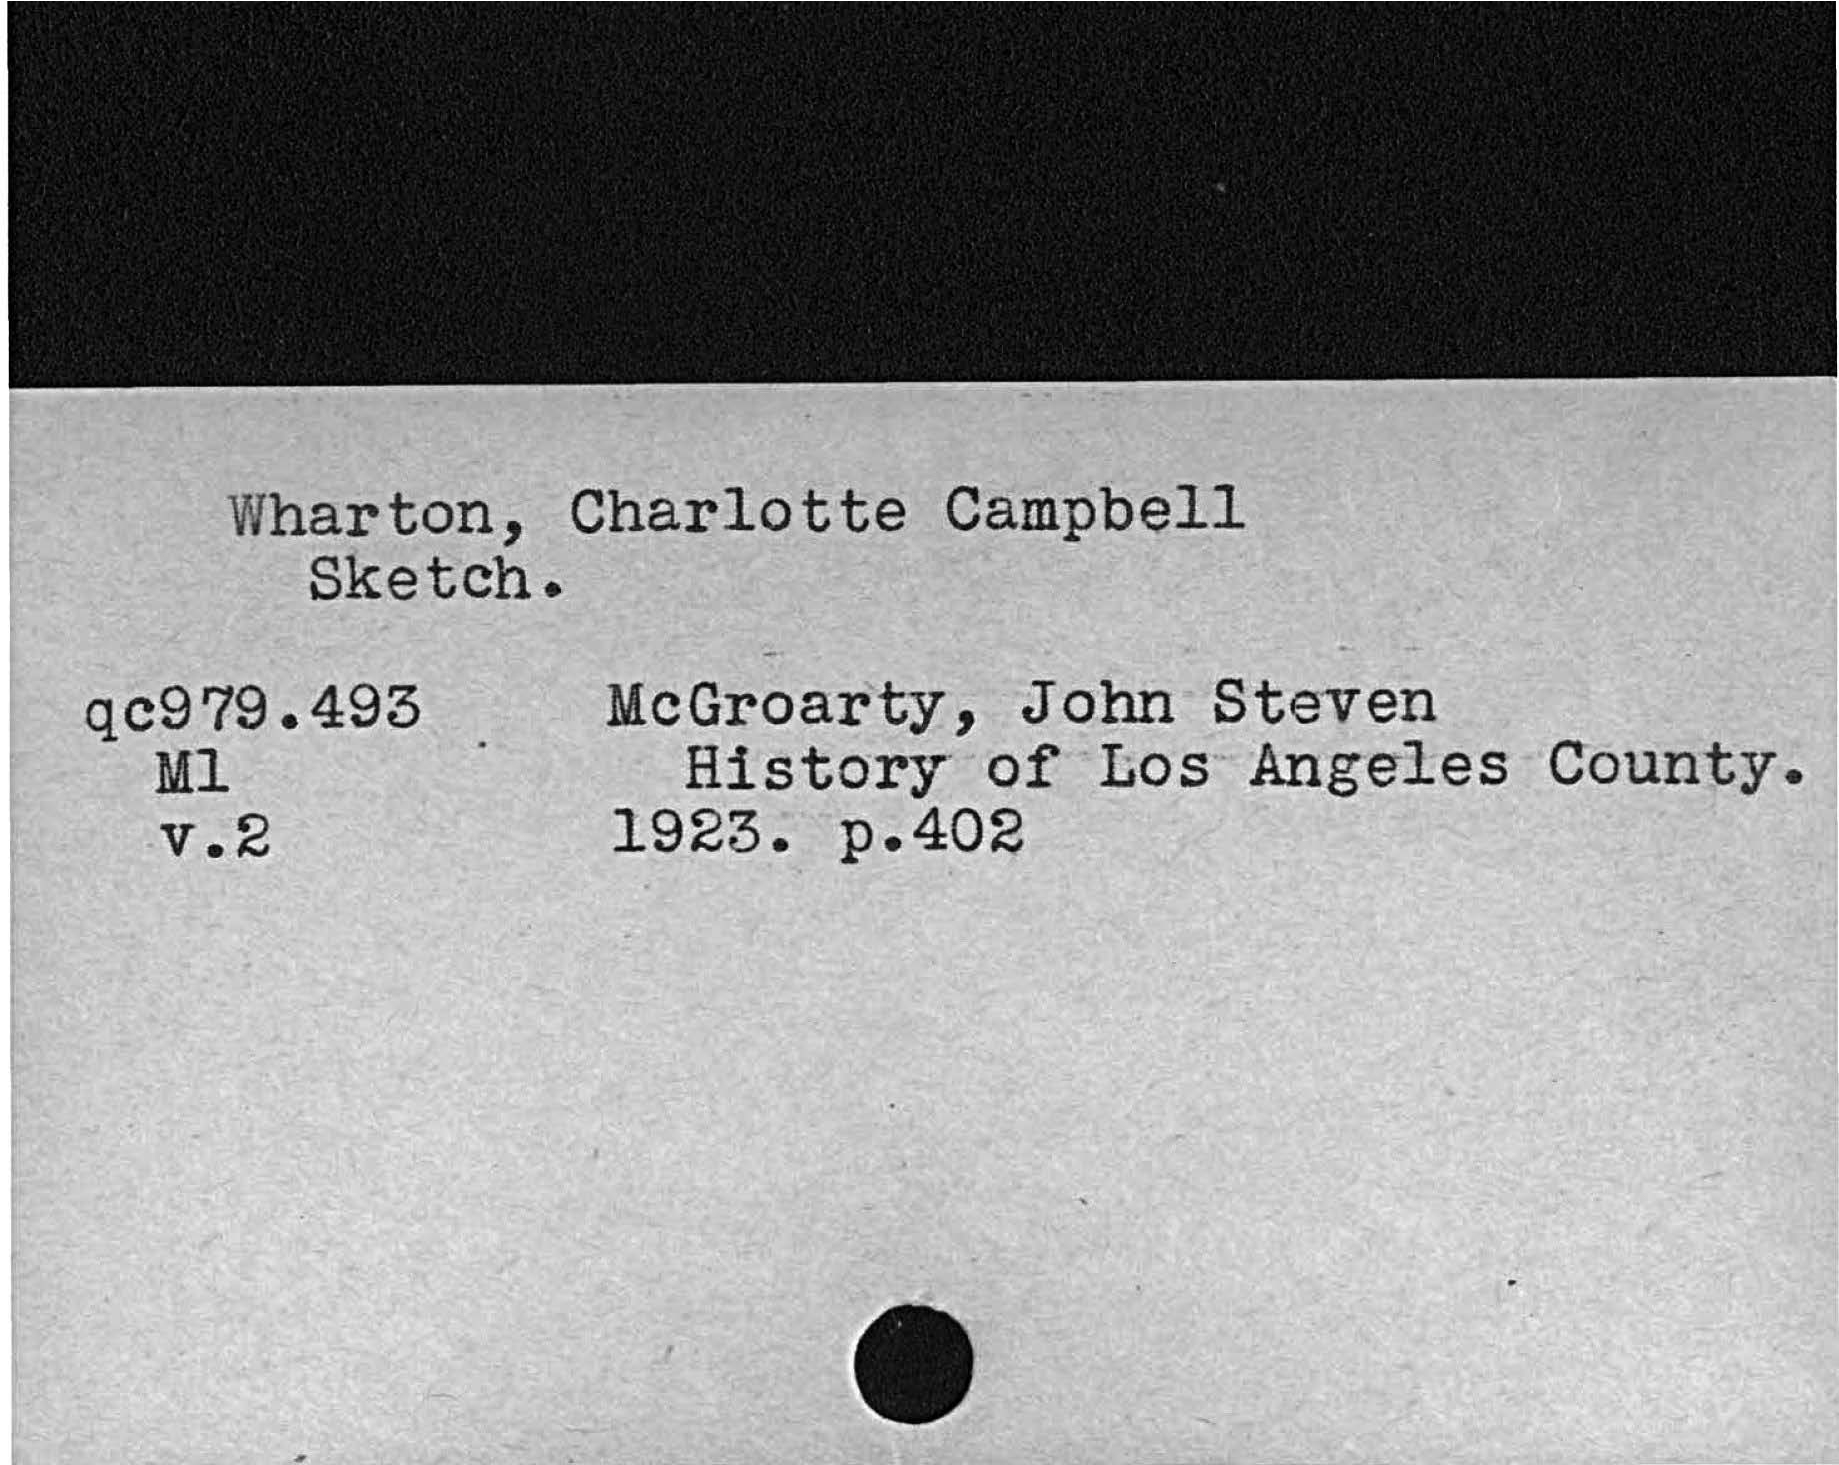 Wharton, Charlotte CampbellSketch.McGroarty, John StevenMl History of Los Angeles County.v. 2 1923 p. 402   qc979. 493